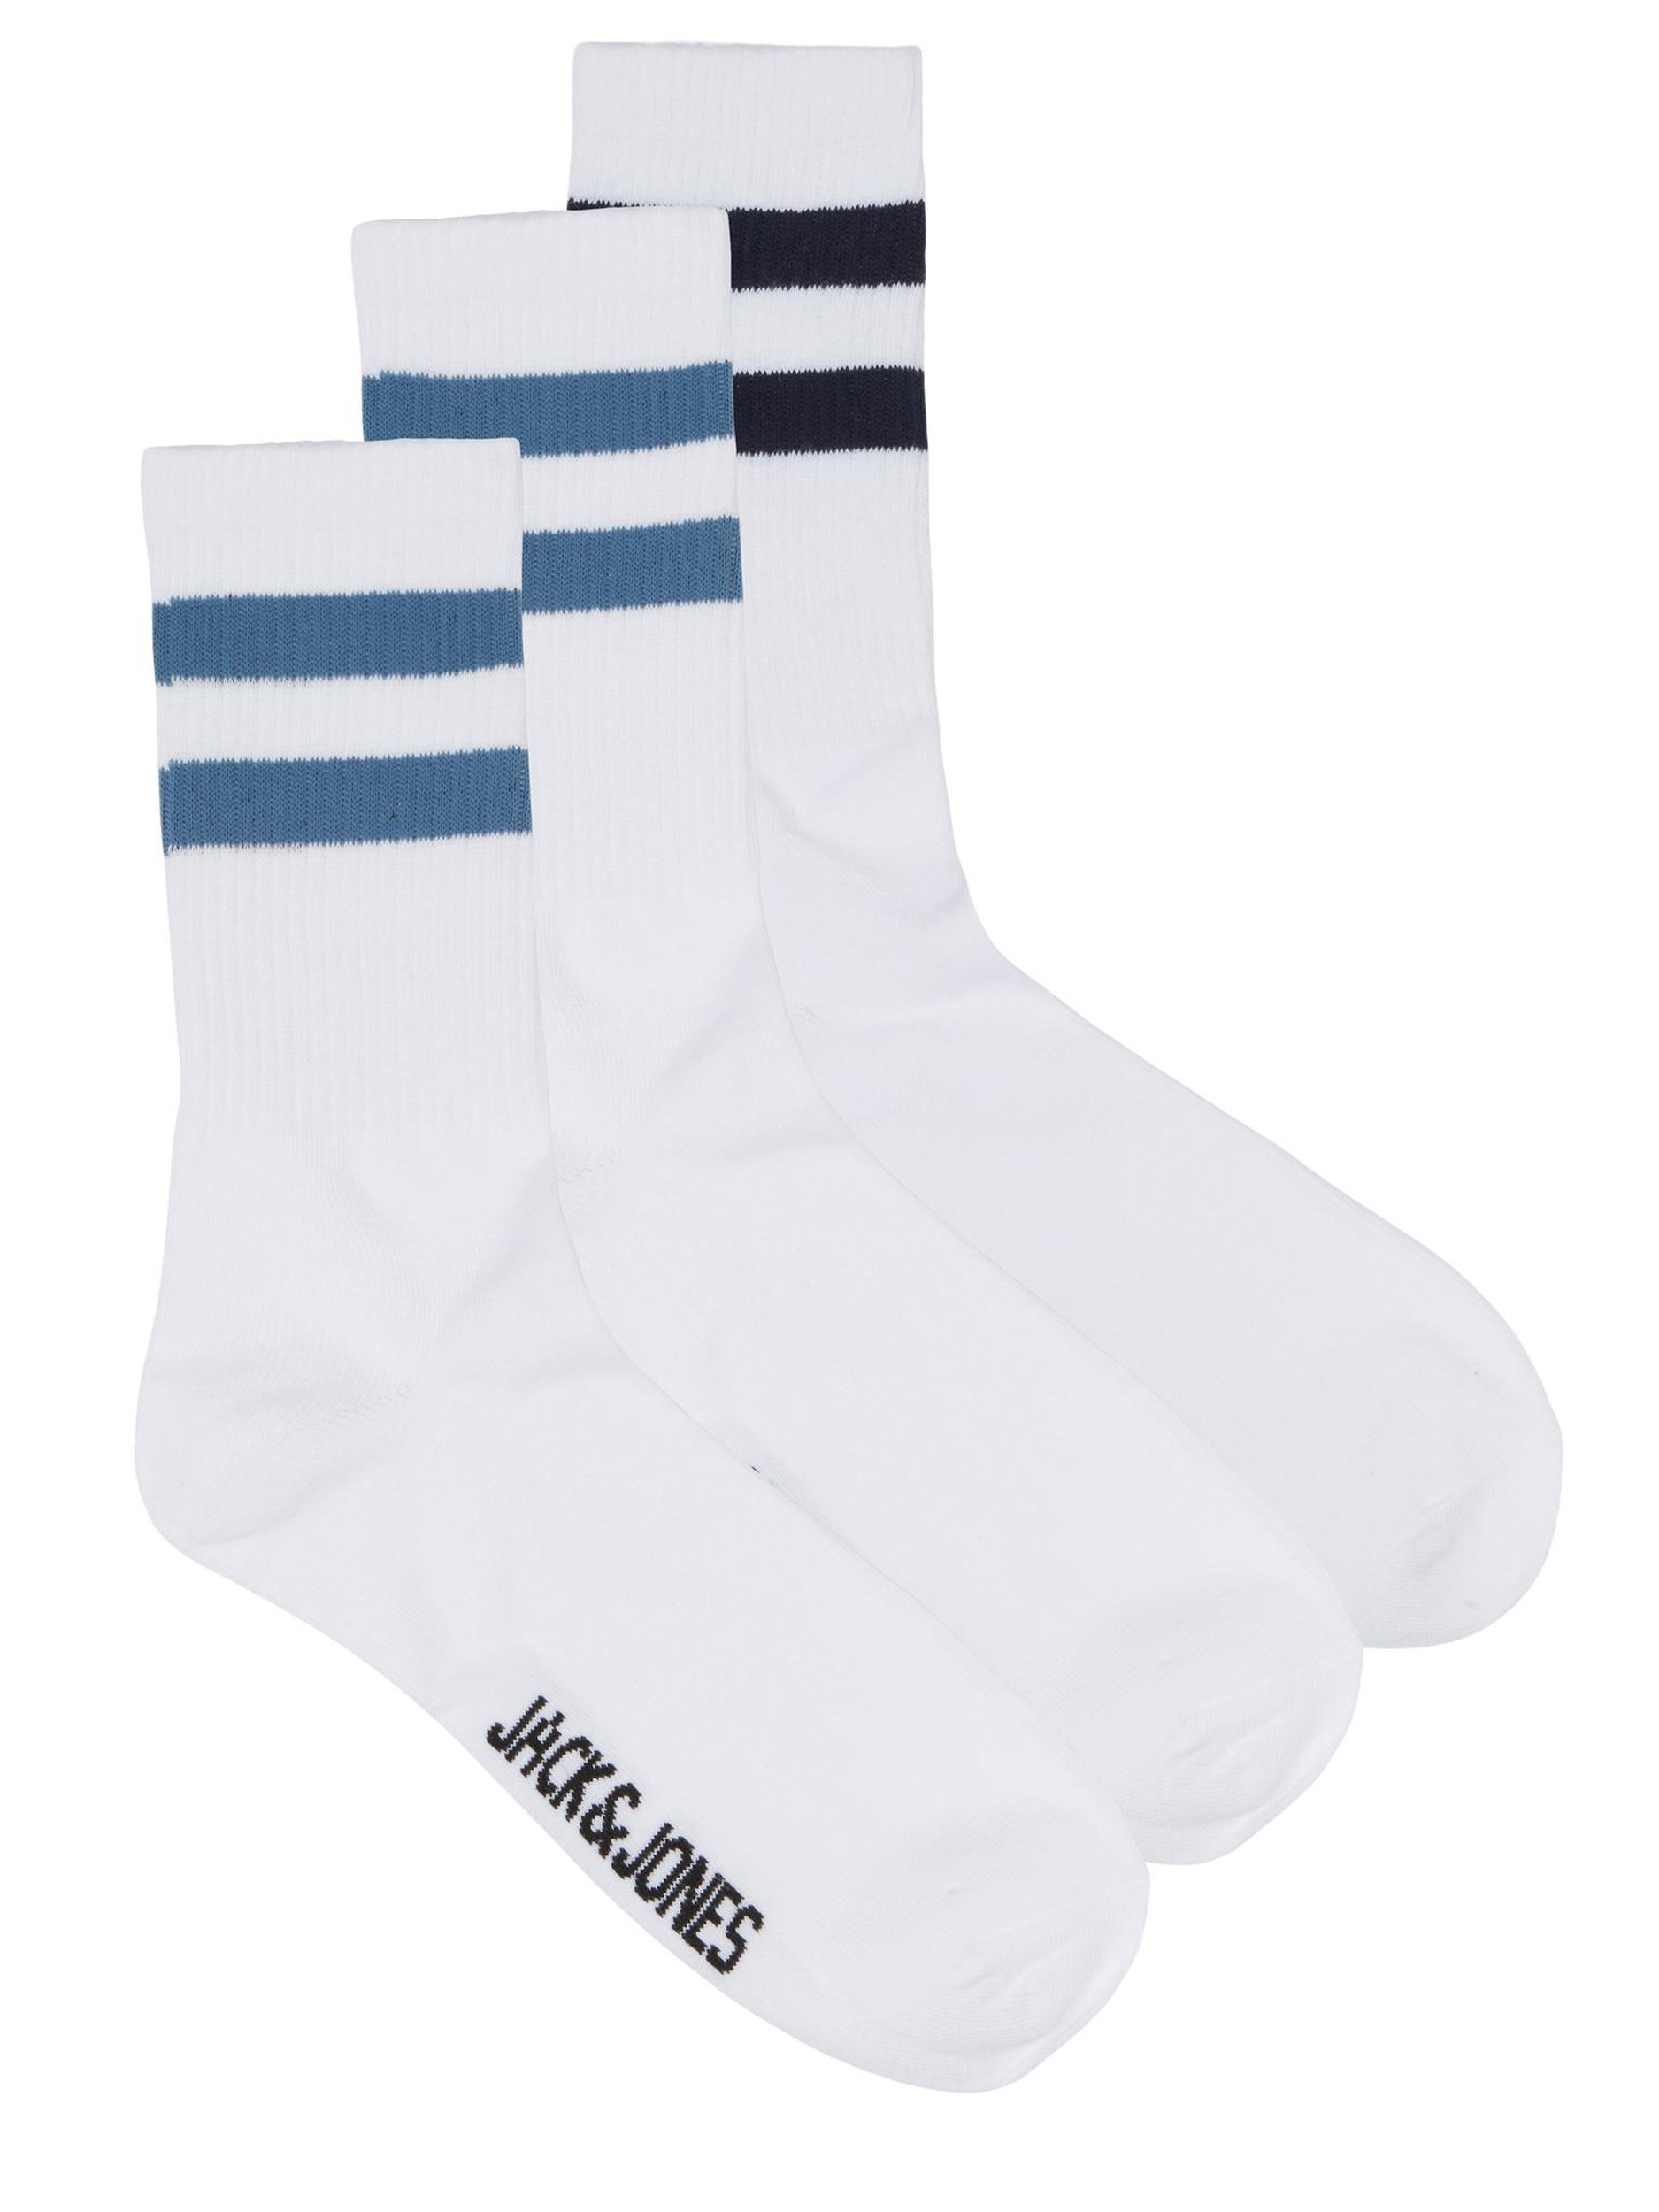 JACK & JONES White & Navy 3 Pack Striped Tennis Socks | BadRhino